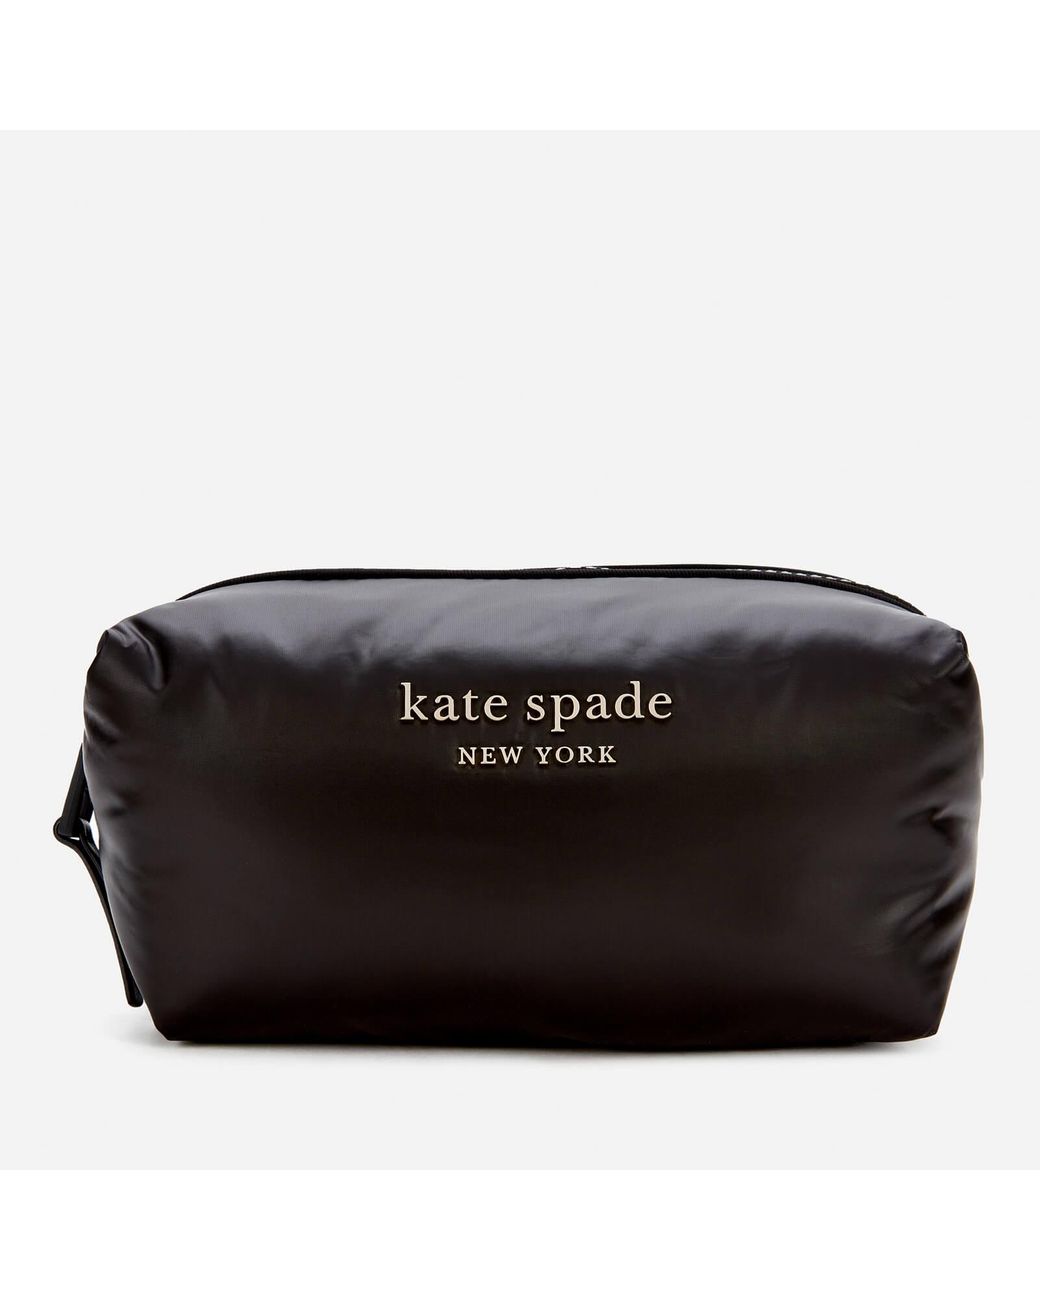 Kate Spade Everything Puffy Medium Cosmetic Bag in Black - Lyst